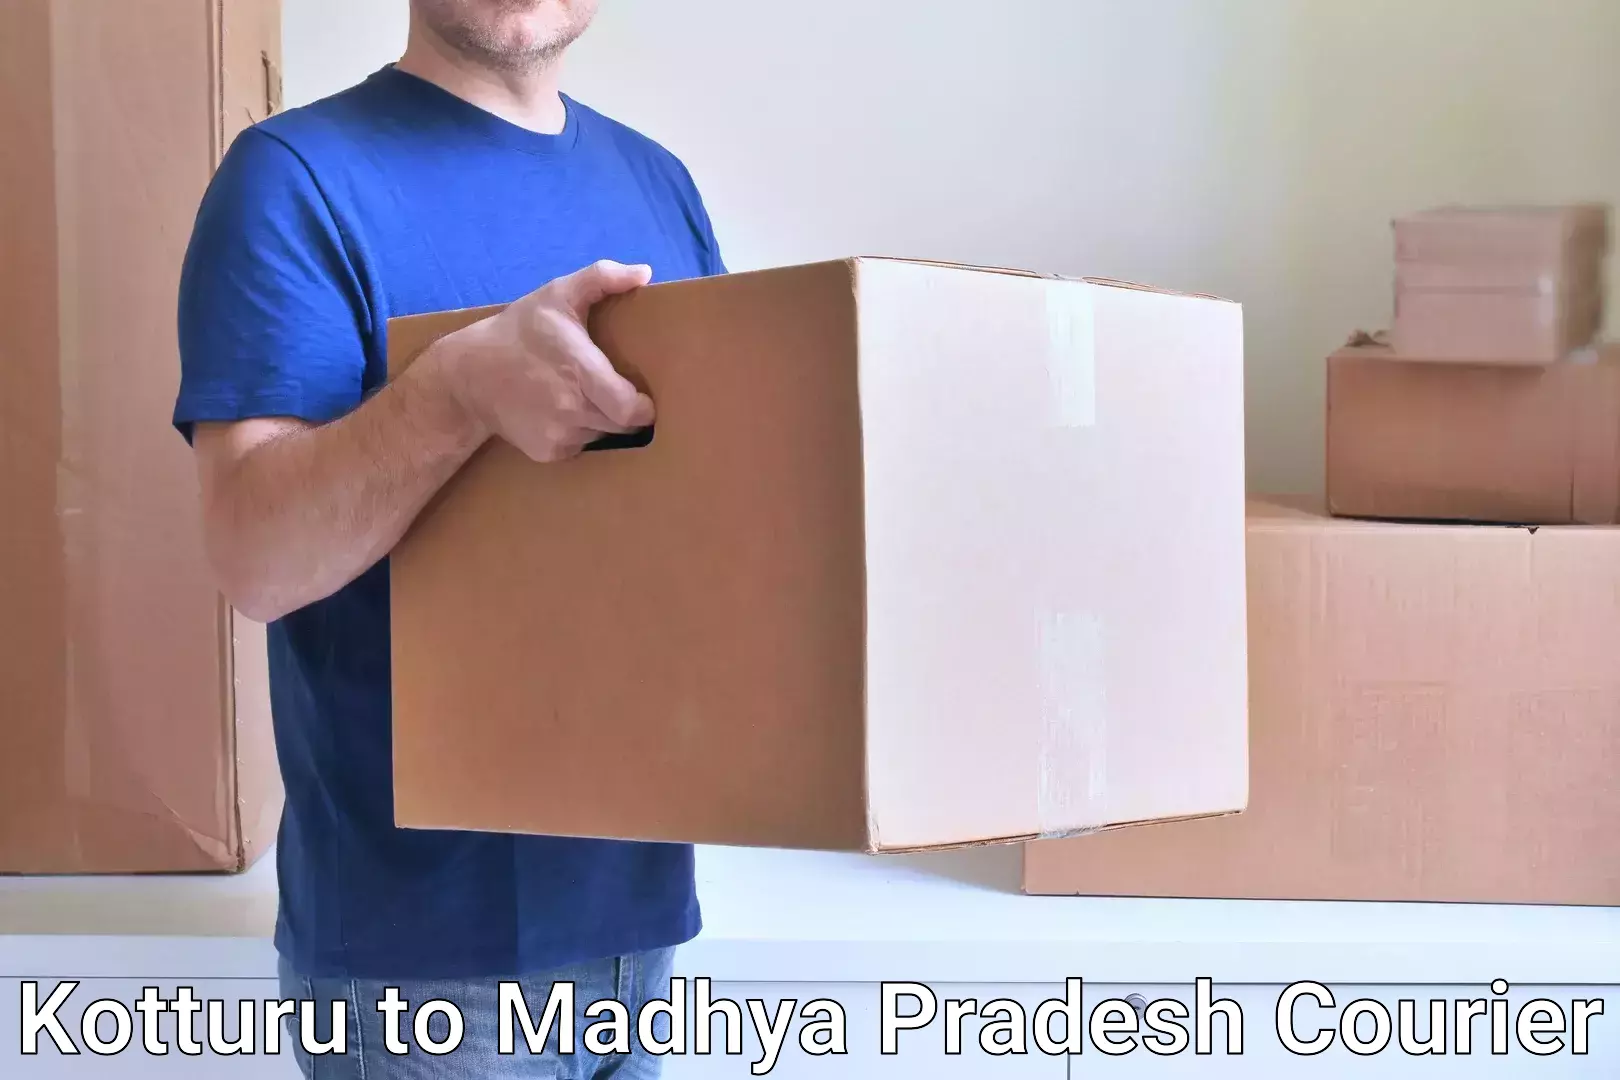 Courier service partnerships Kotturu to Madhya Pradesh